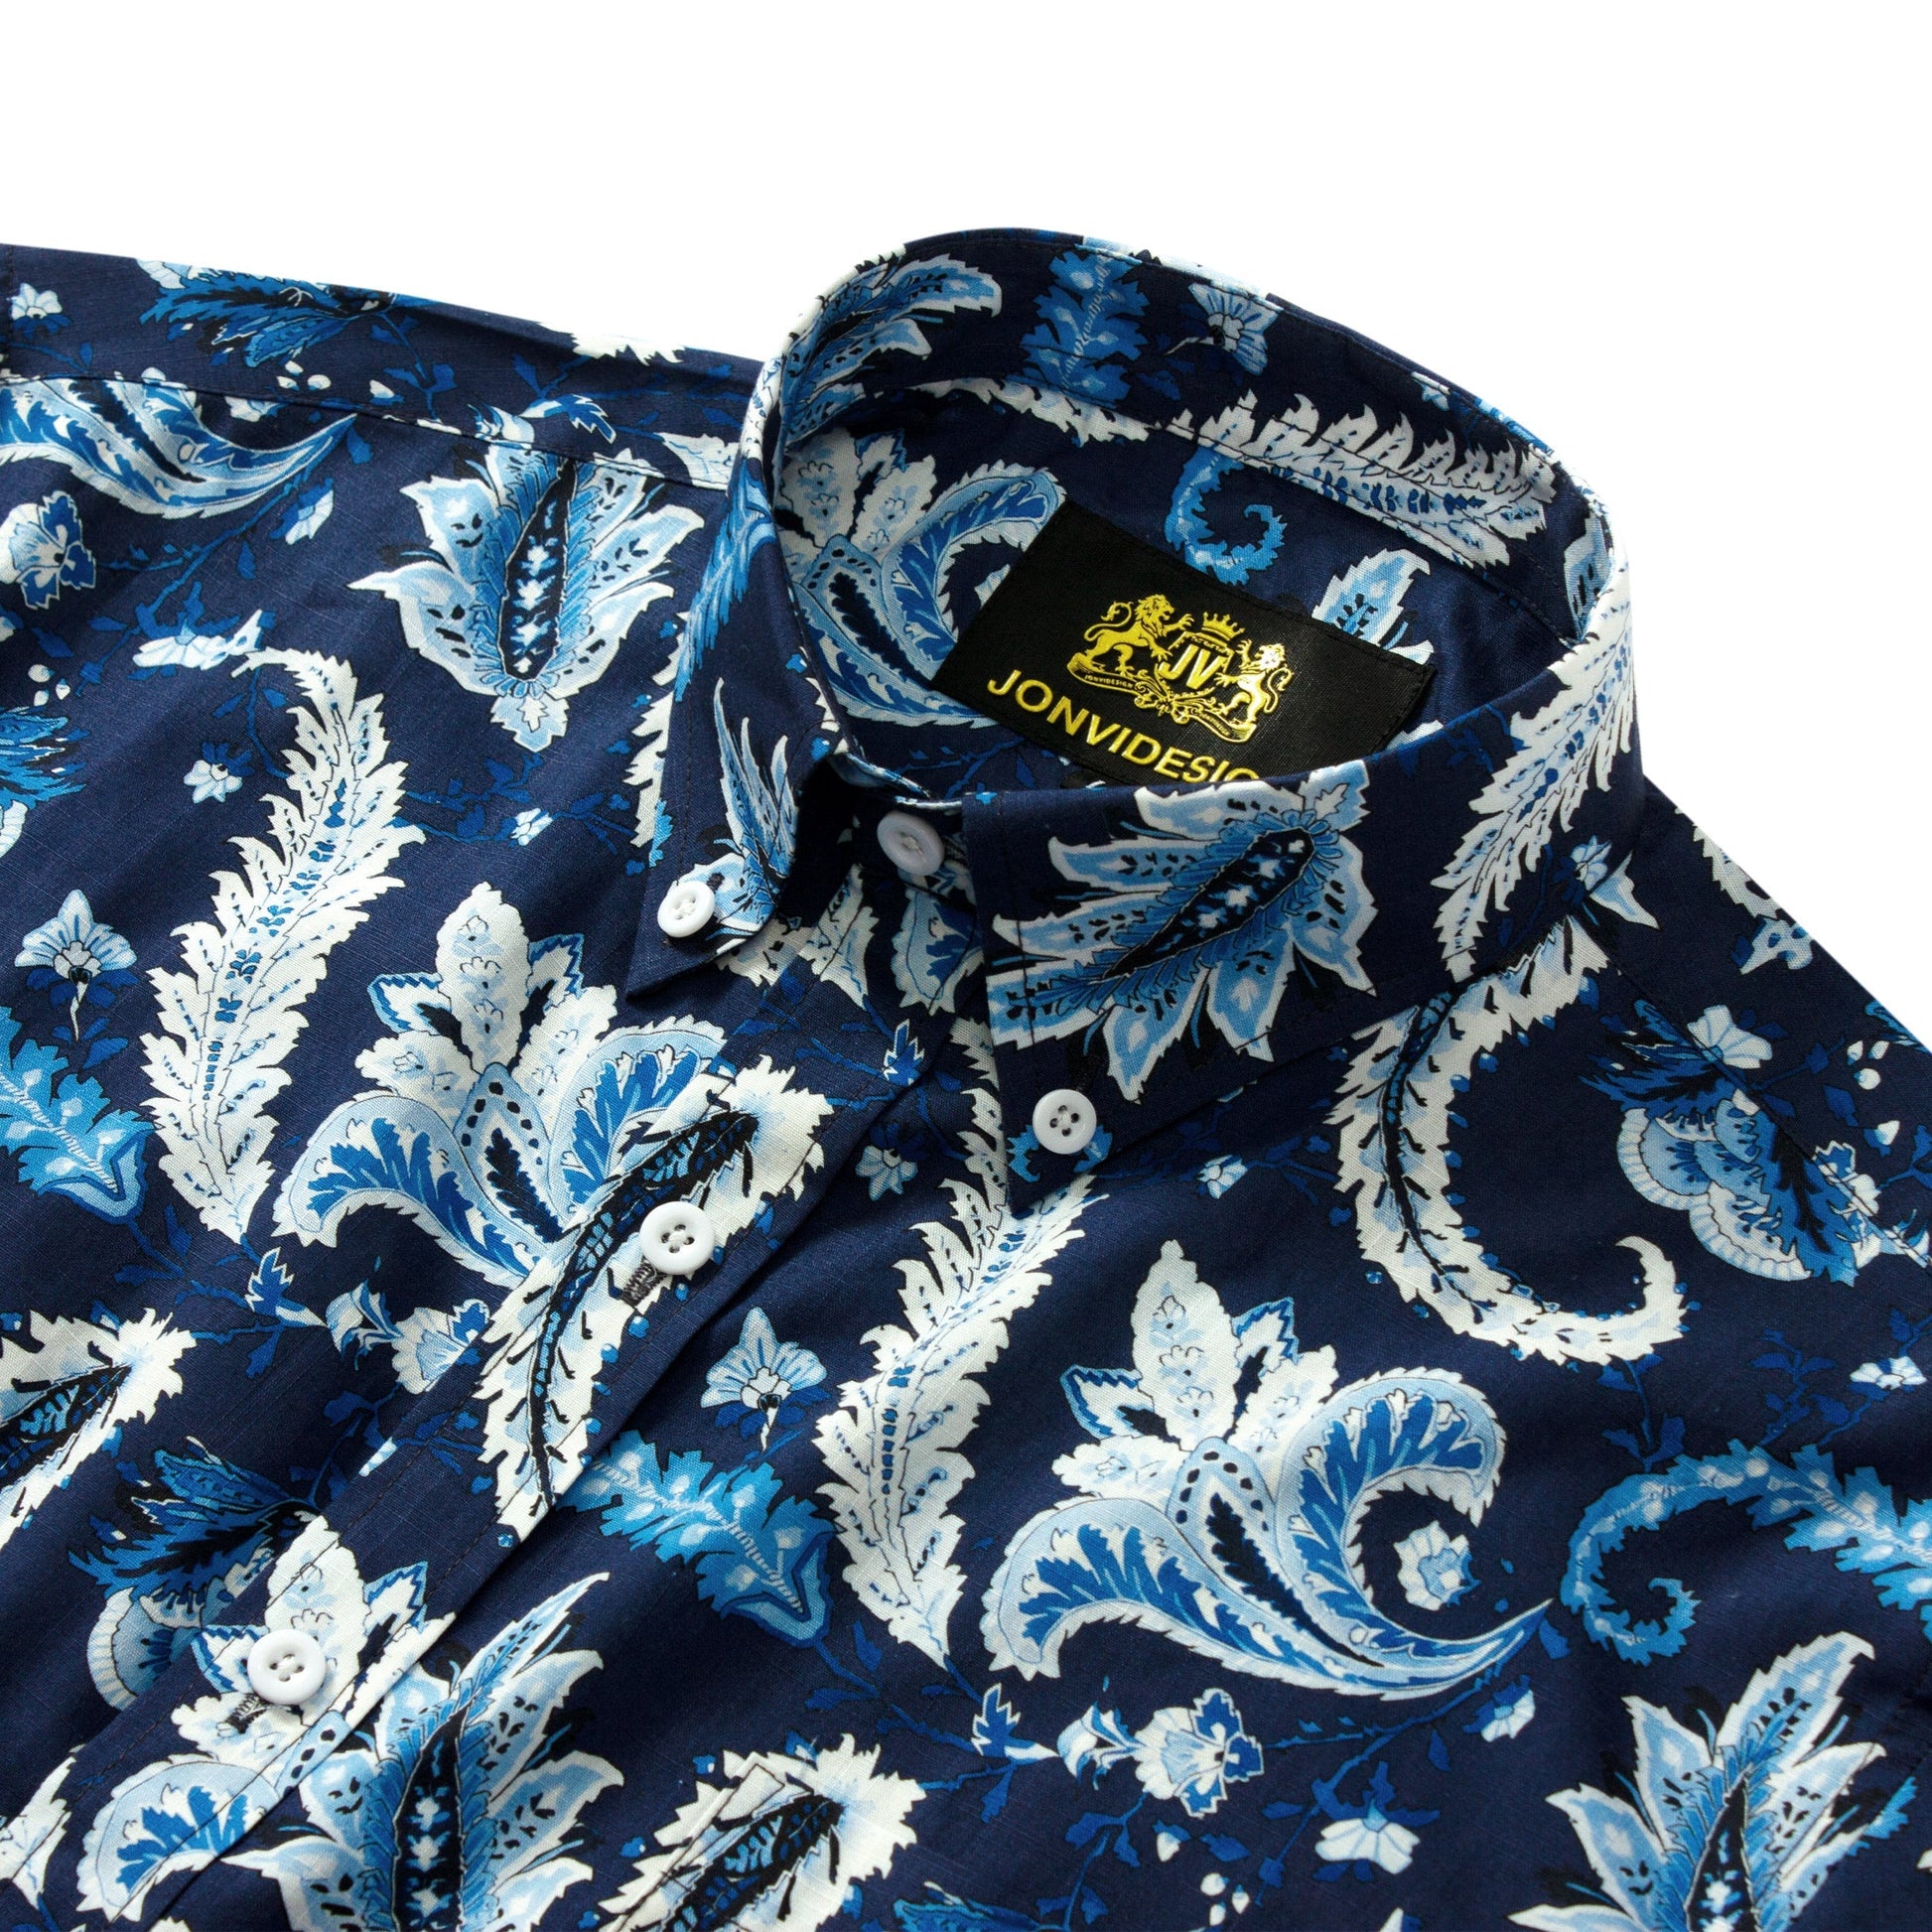 Tropical Style Dark Blue Paisley Short Sleeve Shirt Jonvidesign